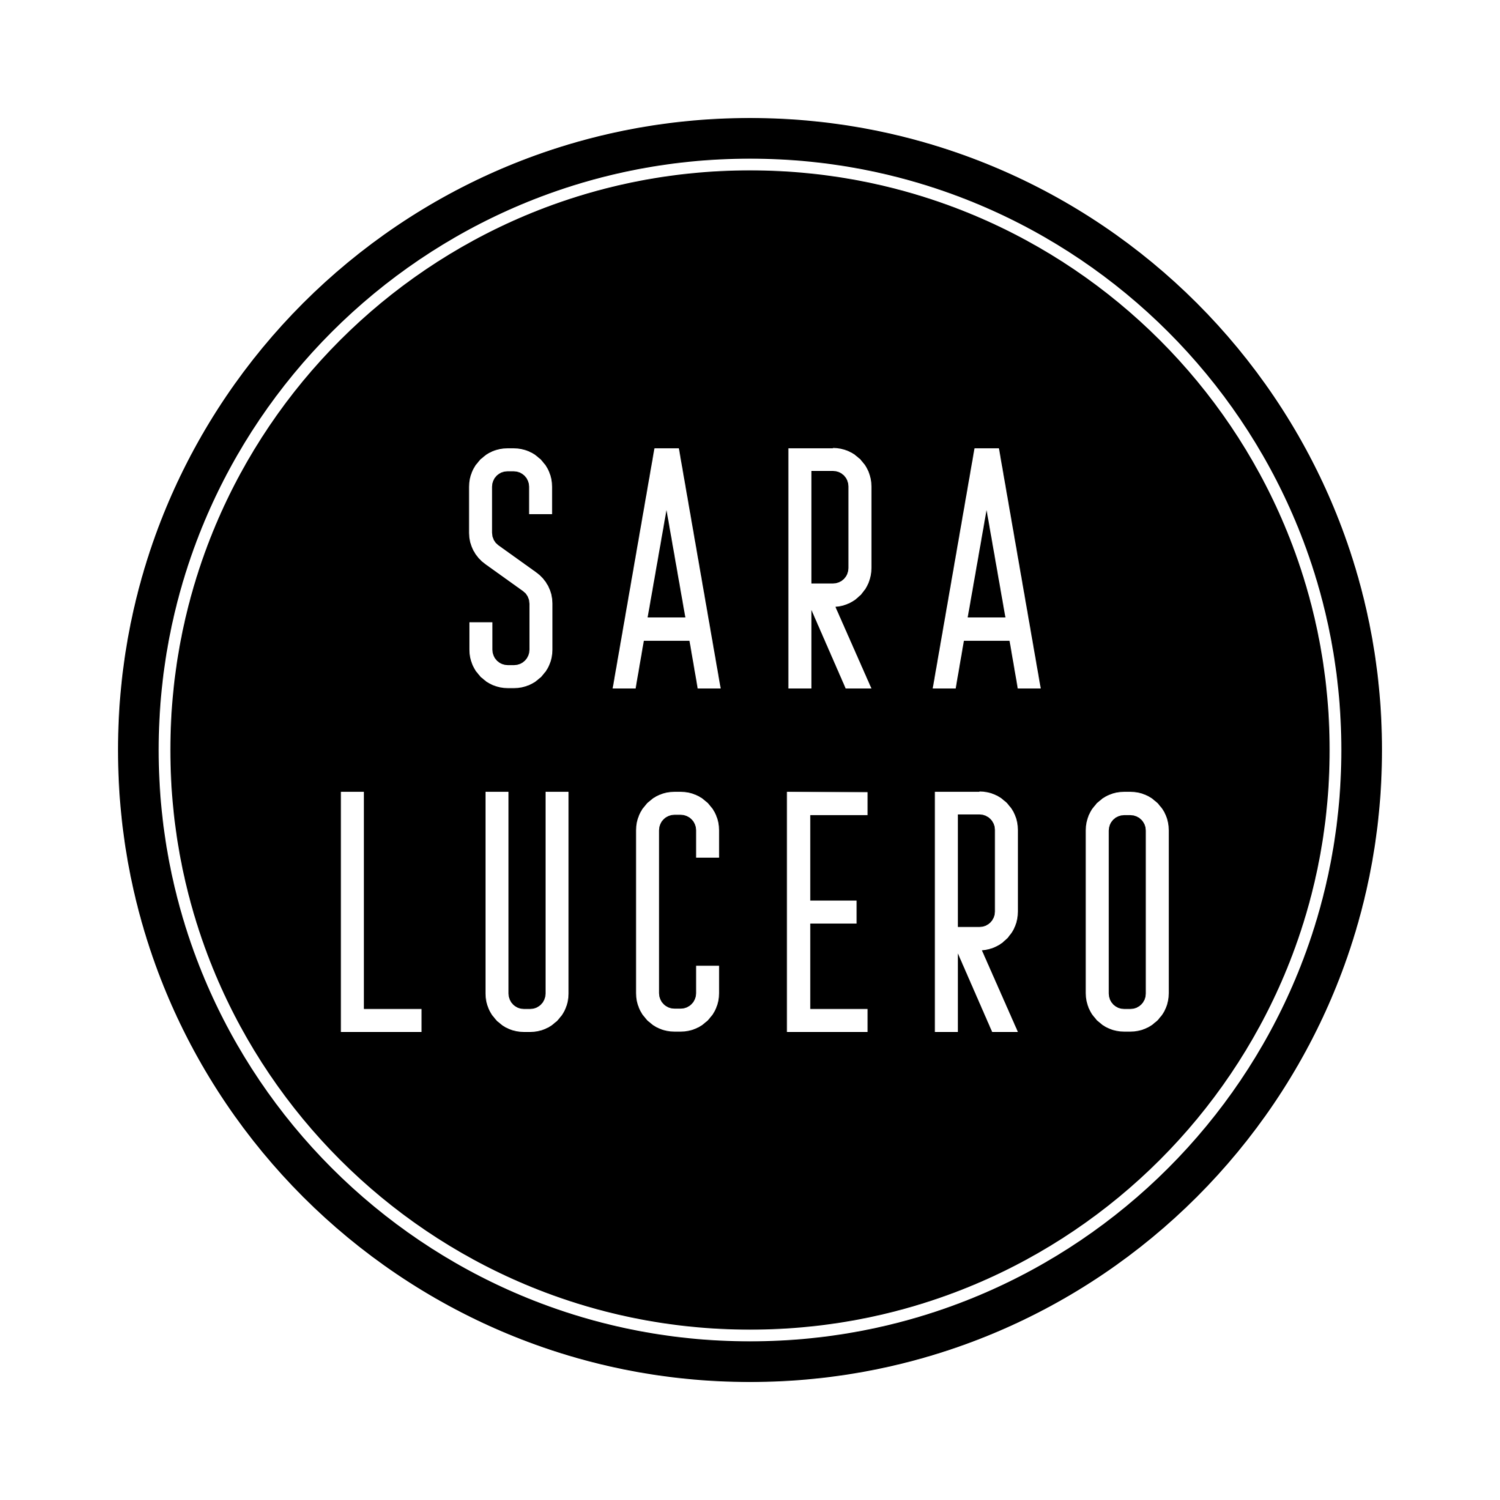 Hello Sara Lucero